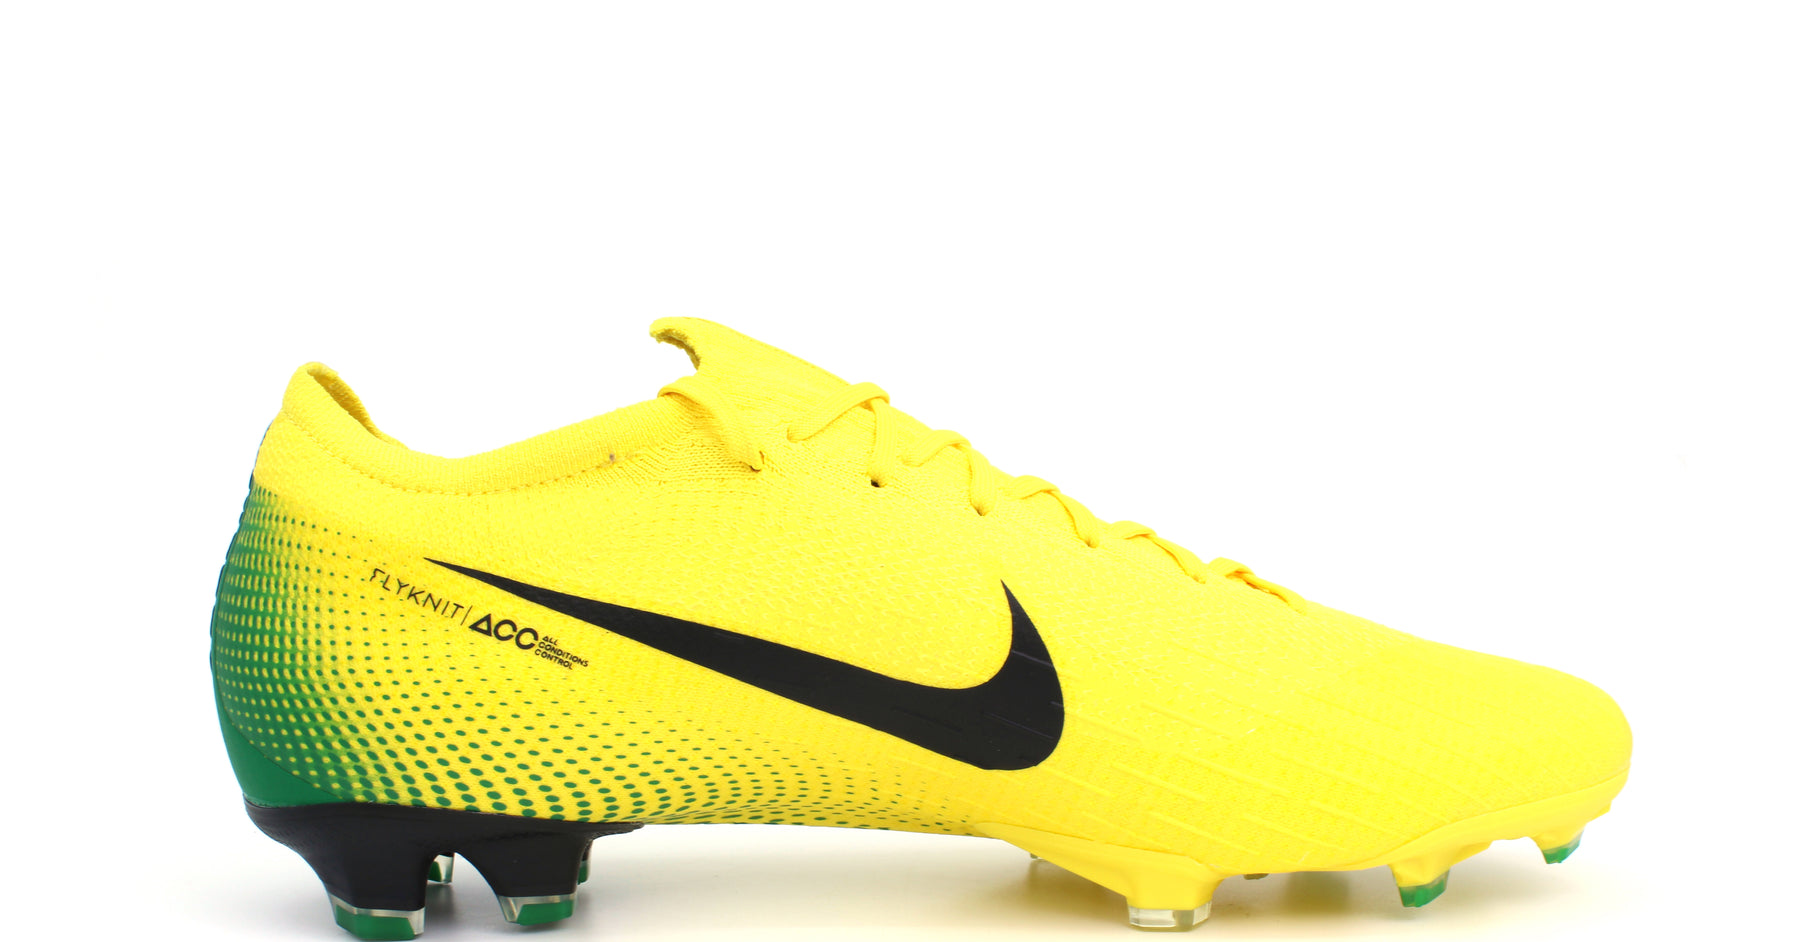 Nike Mercurial Vapor 12 Pack Remake (AJ6735-993) – Soccer Cleats